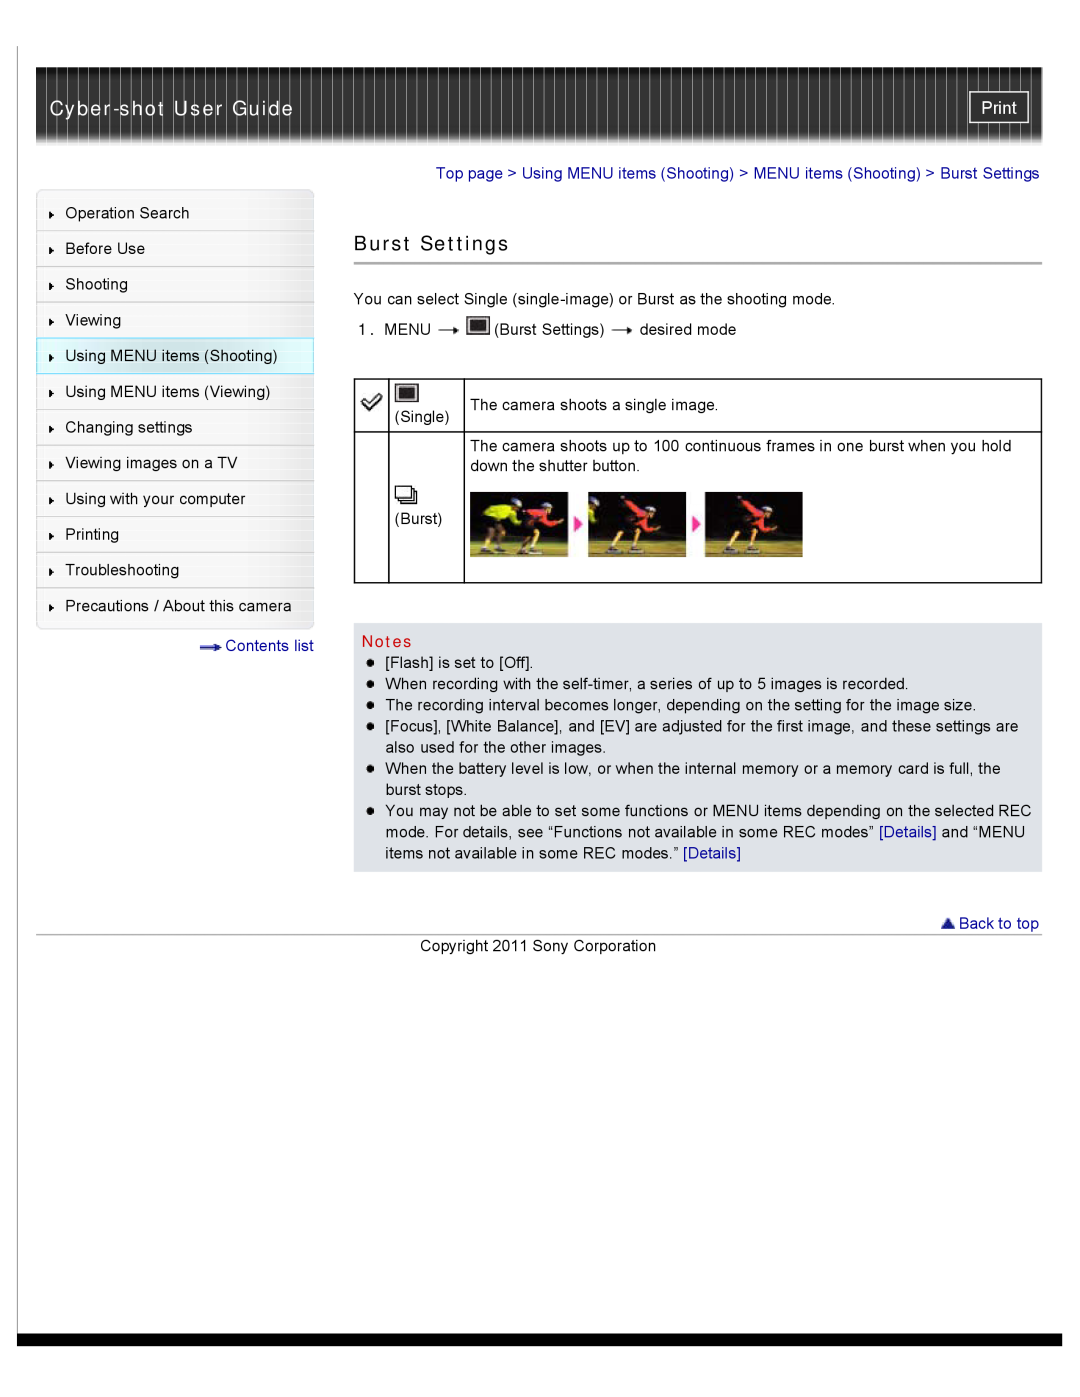 Sony DSC-W510 manual Burst Settings, Cyber-shot User Guide, Print, Back to top 